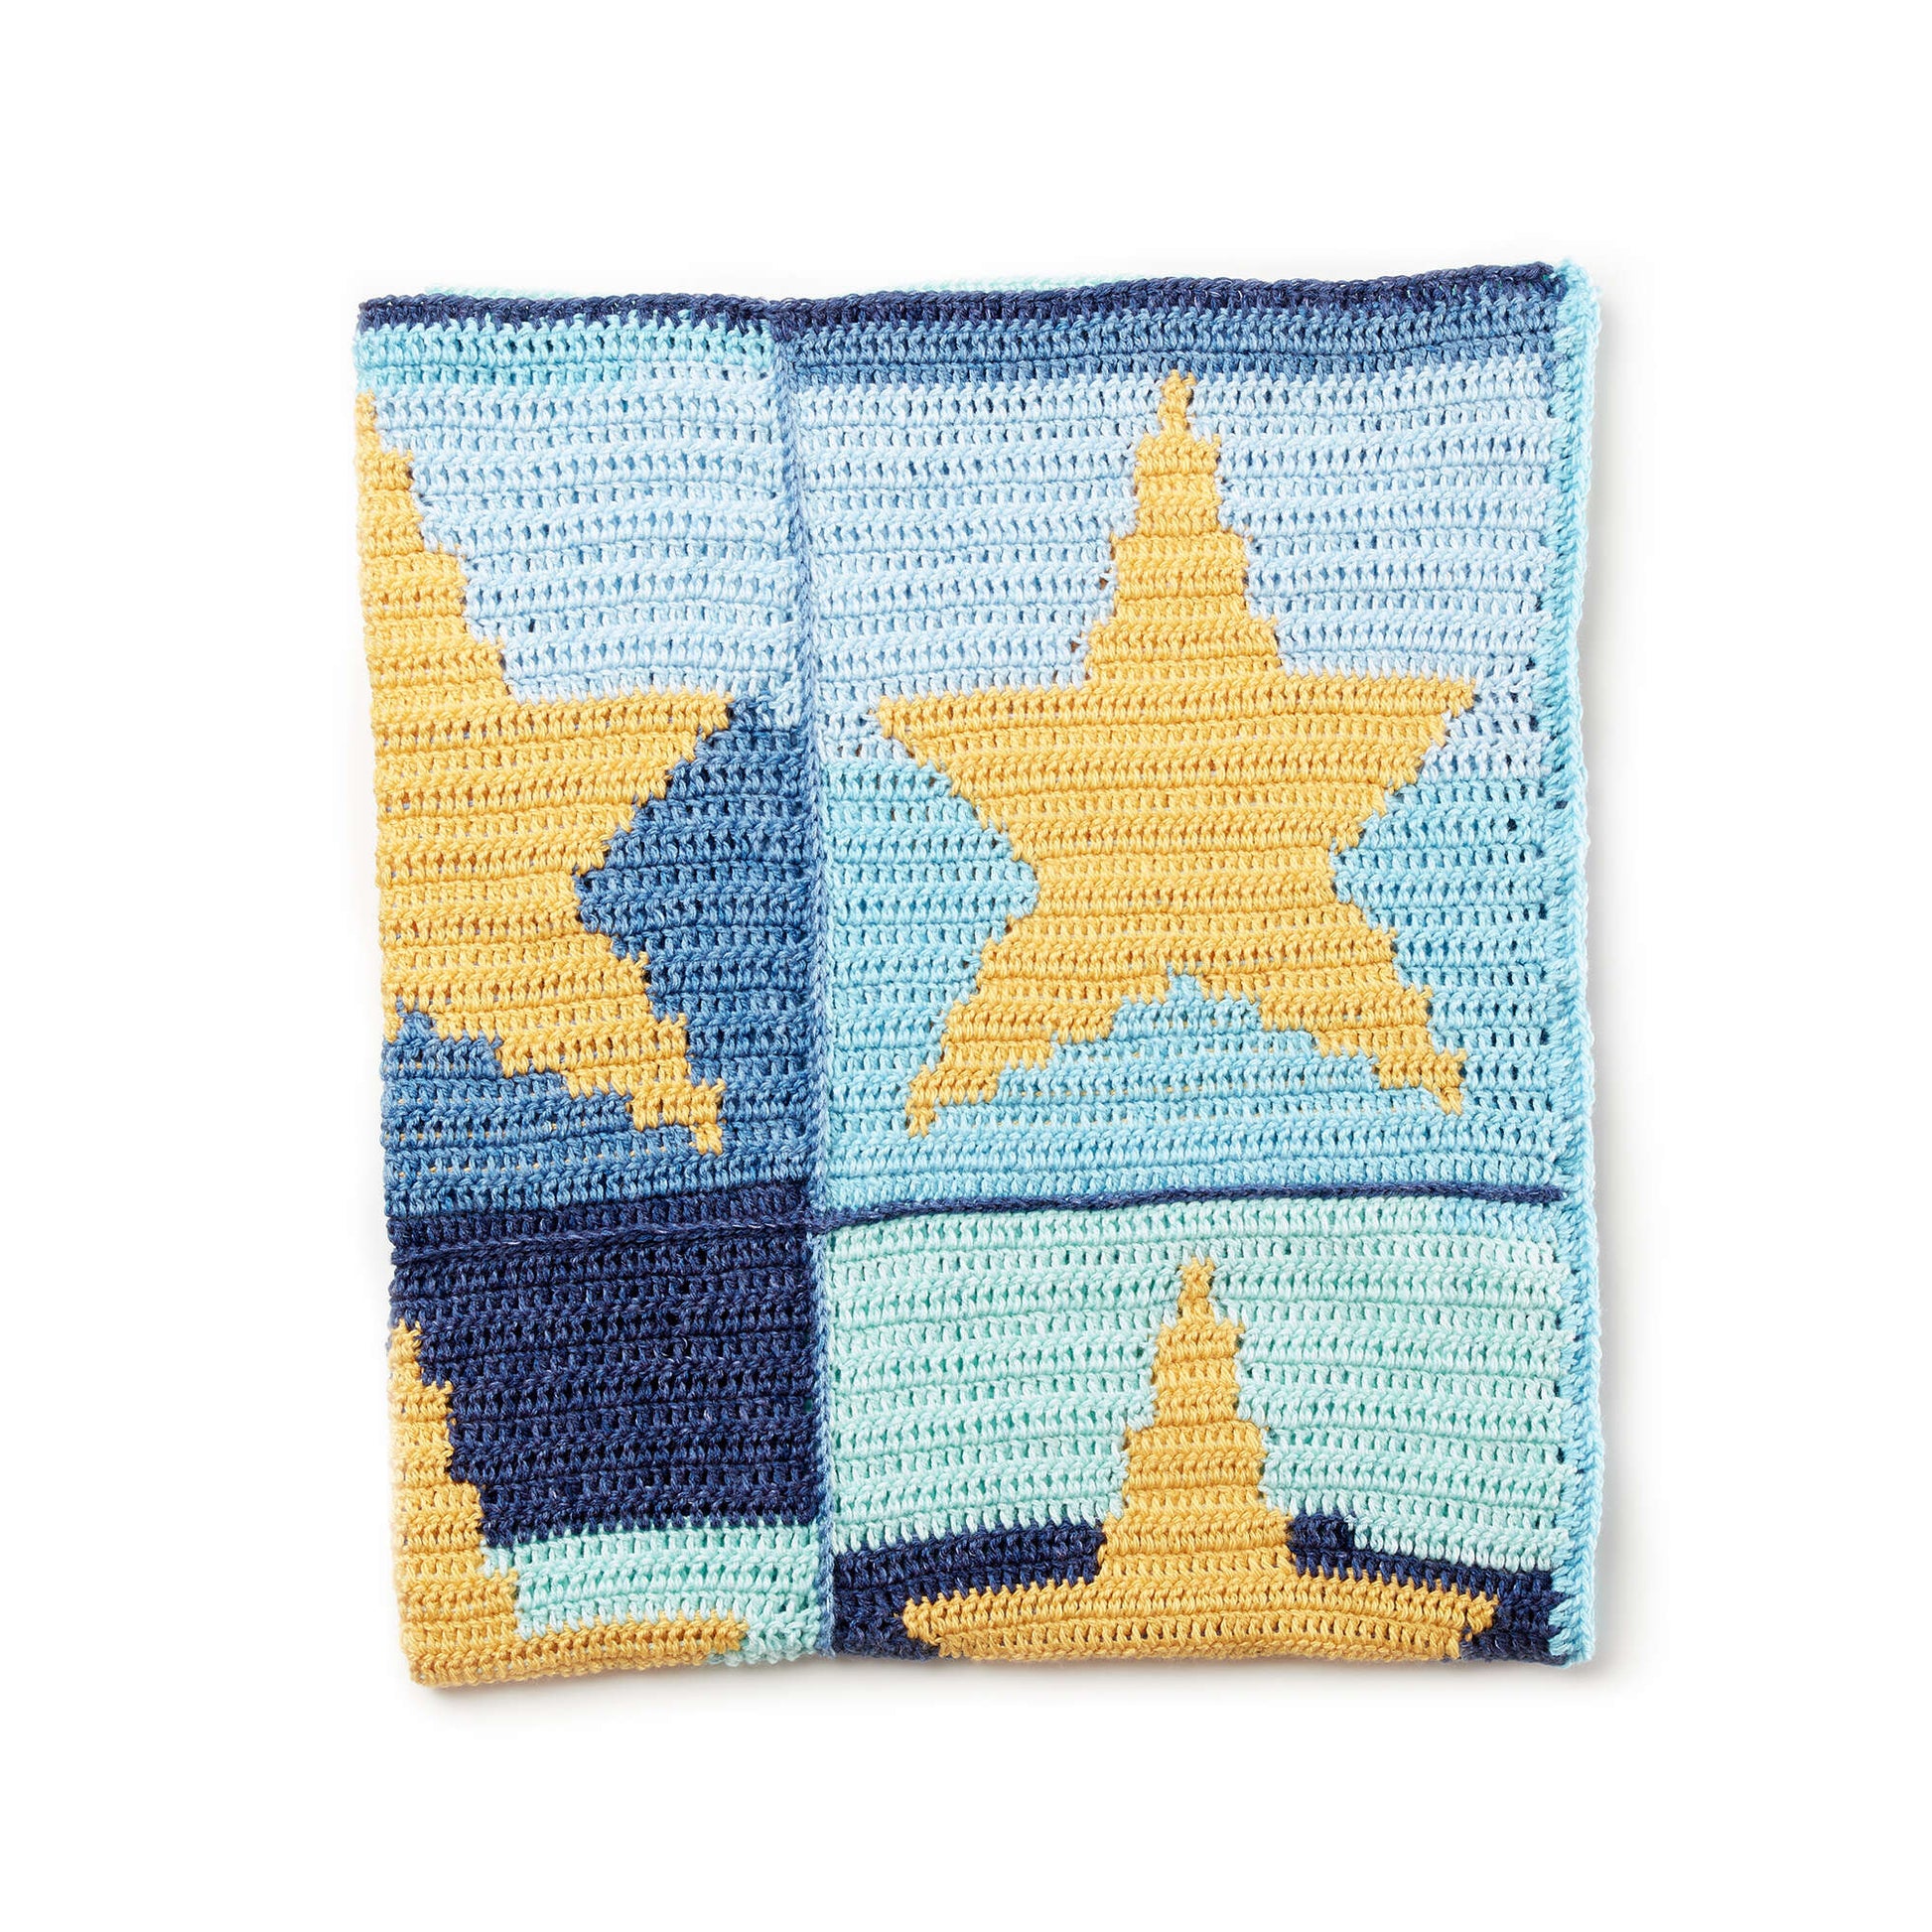 Bernat Starry Sky Crochet Blanket Crochet Blanket made in Bernat Softee Baby yarn